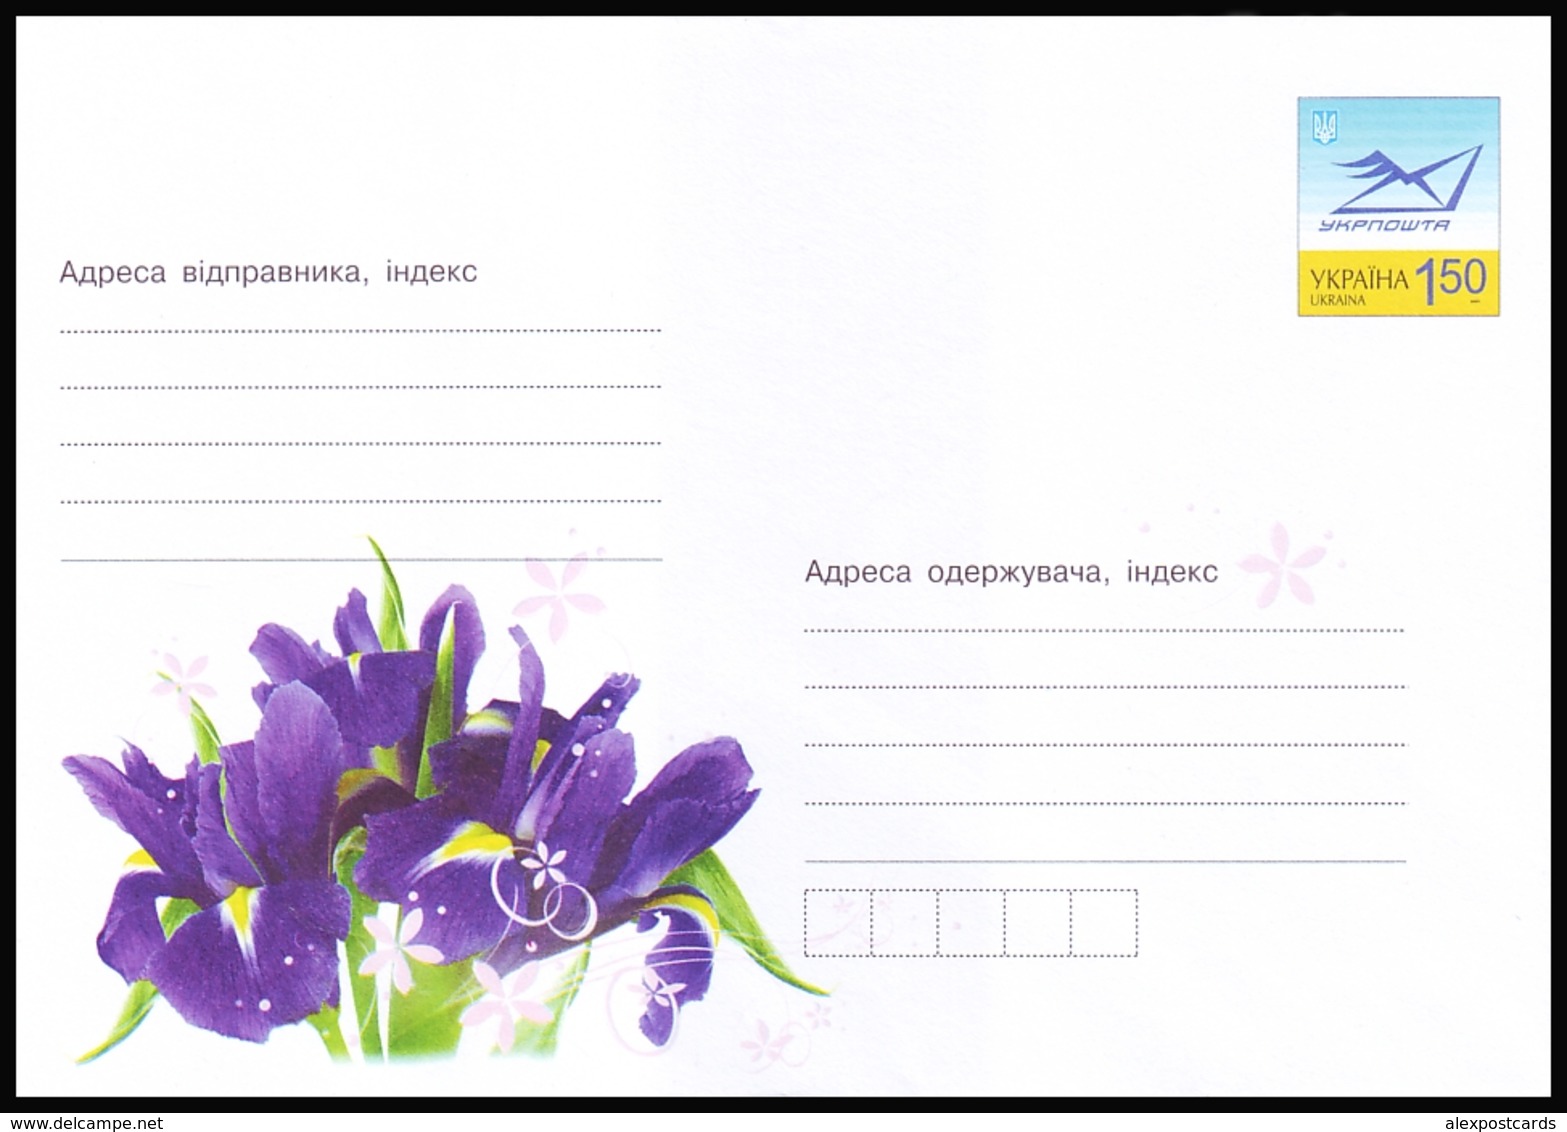 UKRAINE 2009. (9-3008). IRIS FLOWERS. Postal Stationery Stamped Cover (**) - Ukraine